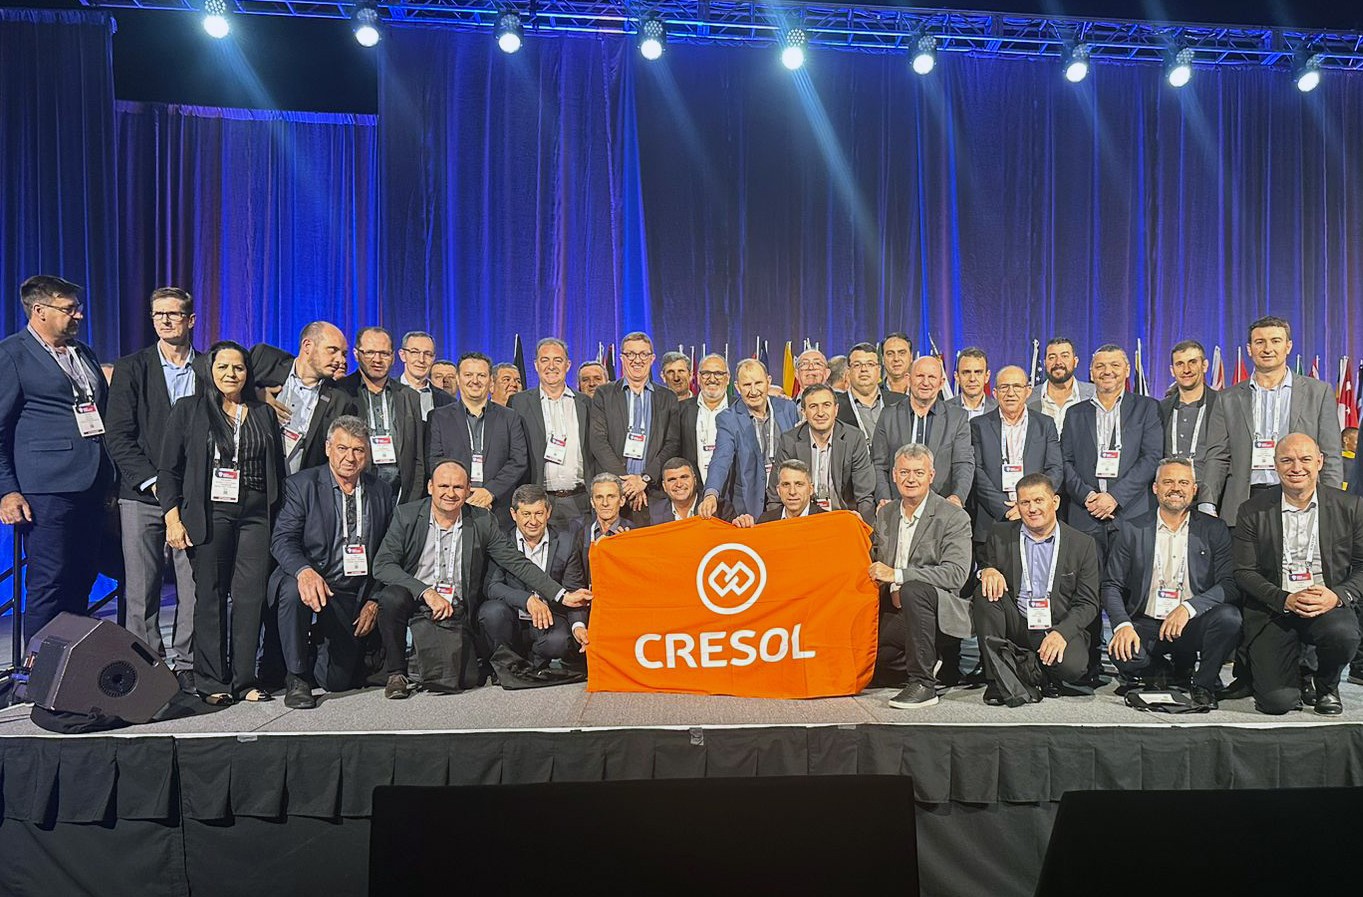 Cresol participa da Conferência Mundial das Cooperativas de Crédito, nos EUA 